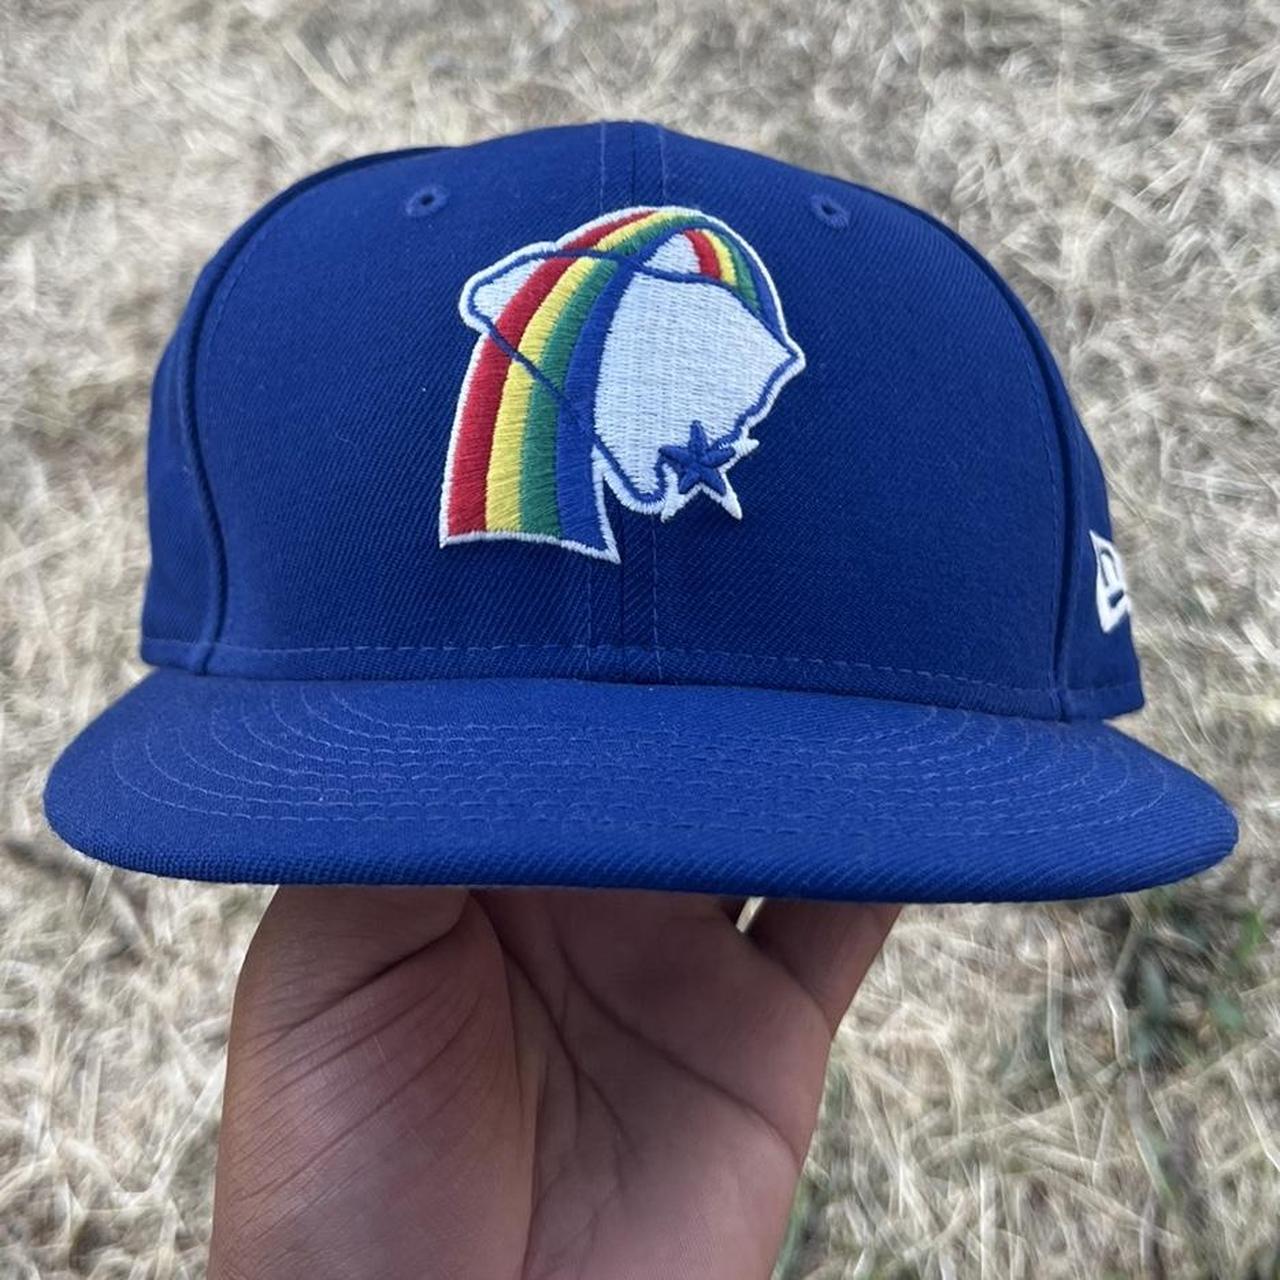 Men's Hawaii Rainbow Warriors Hats